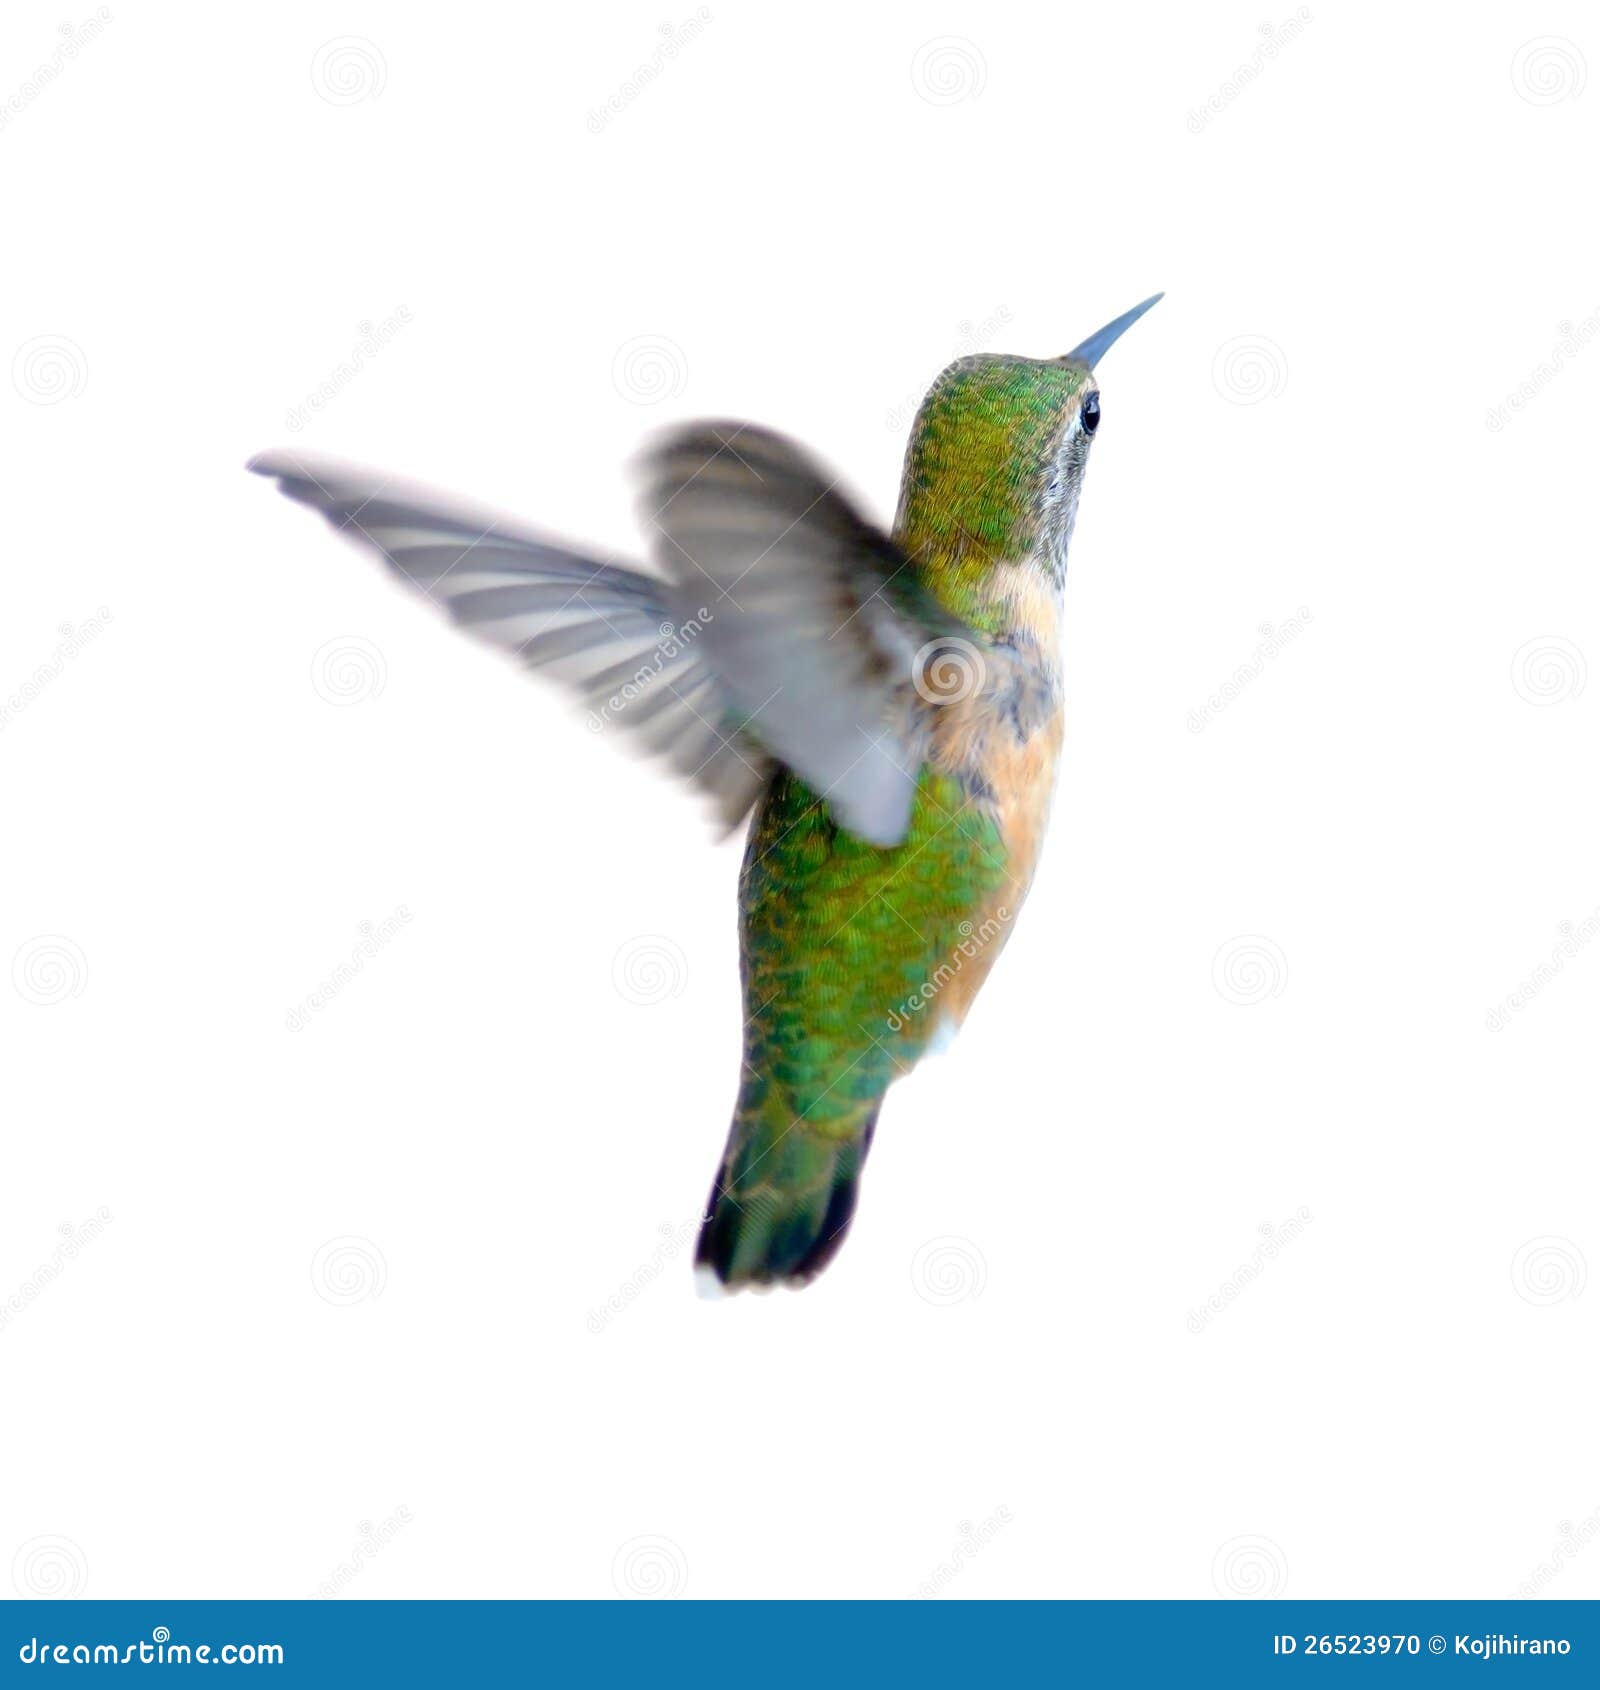 rufous hummingbird